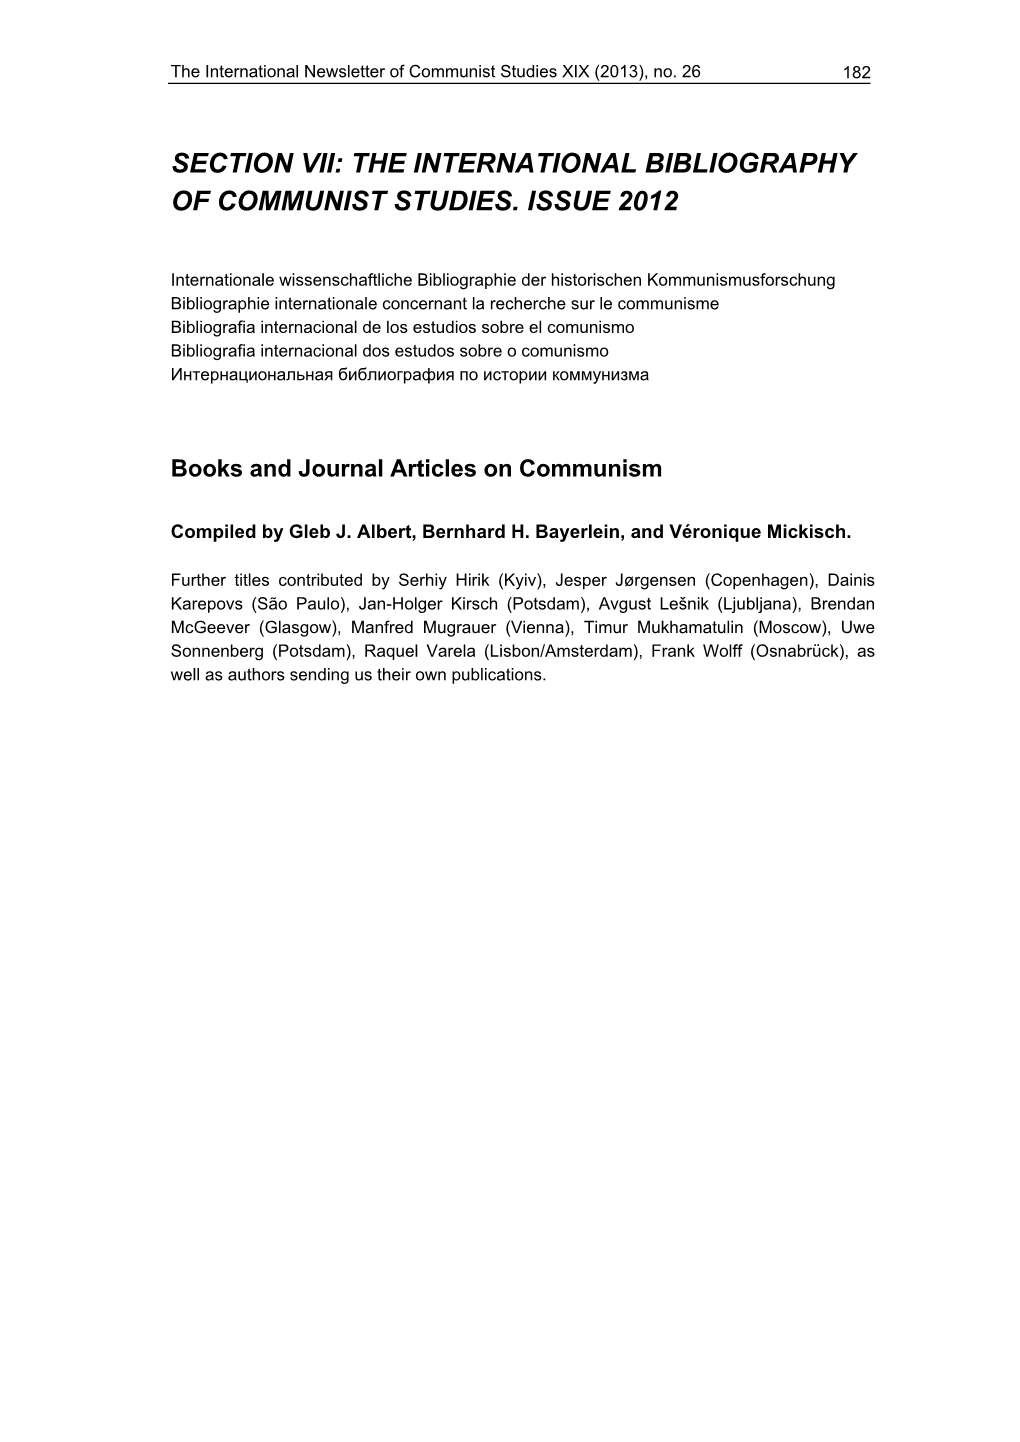 The International Bibliography of Communist Studies. Issue 2012